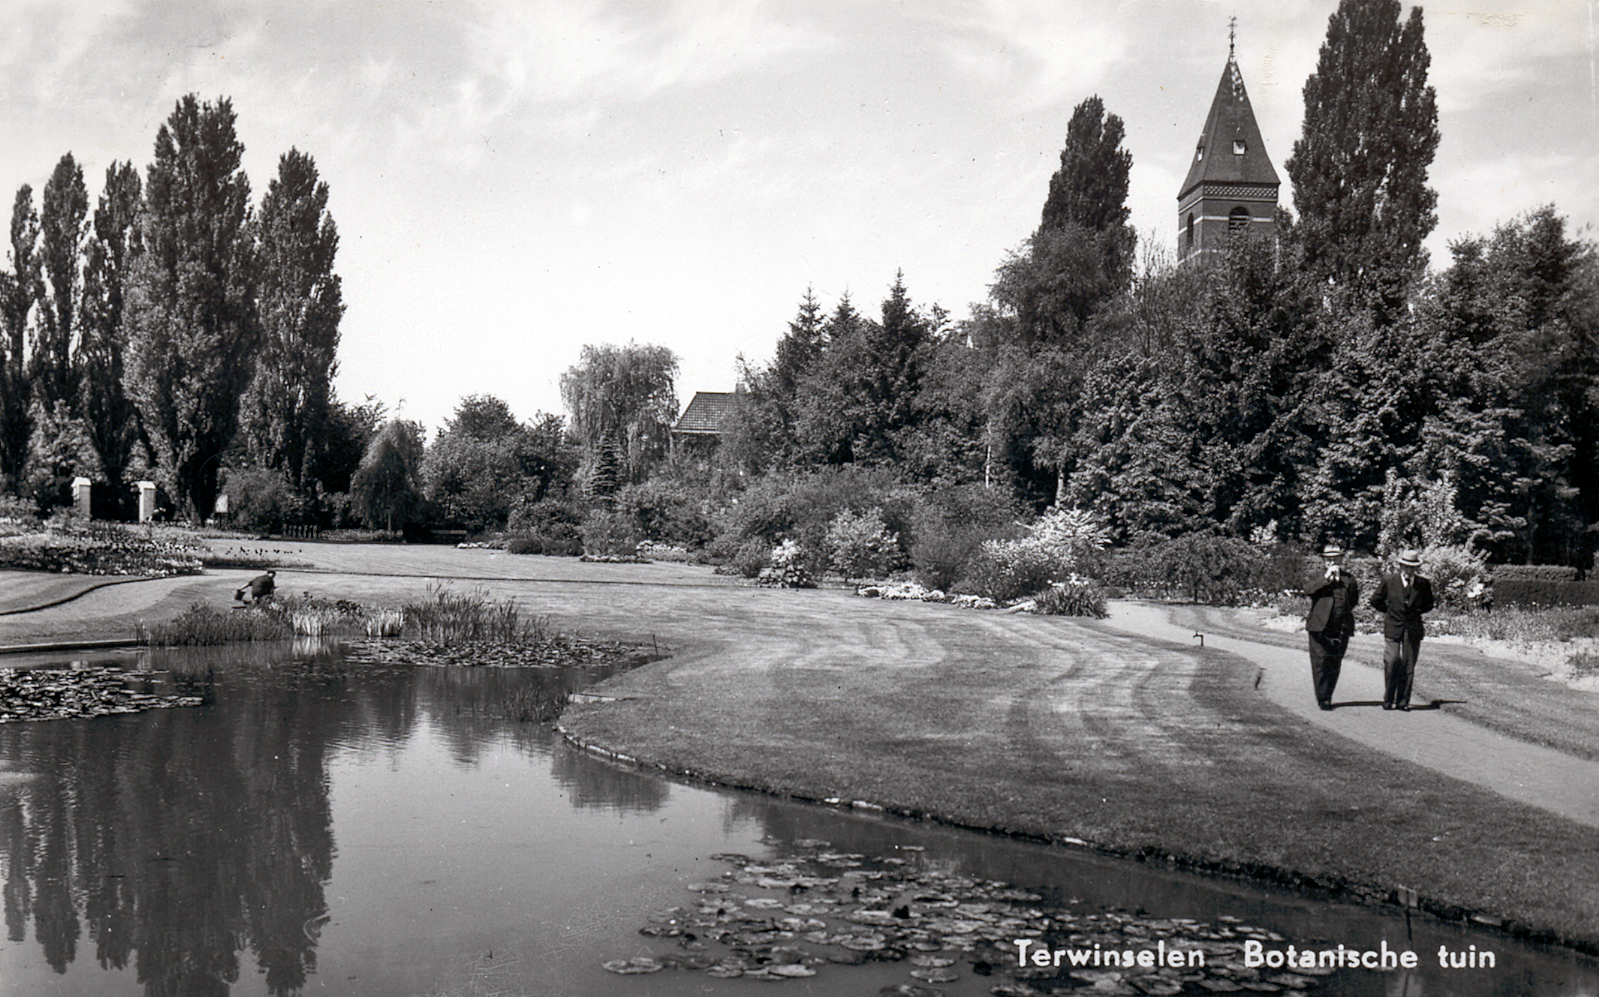 Botanical Garden Kerkrade, 1960-1970 (photo: J. Savelkoul, Municipal archives Kerkrade)